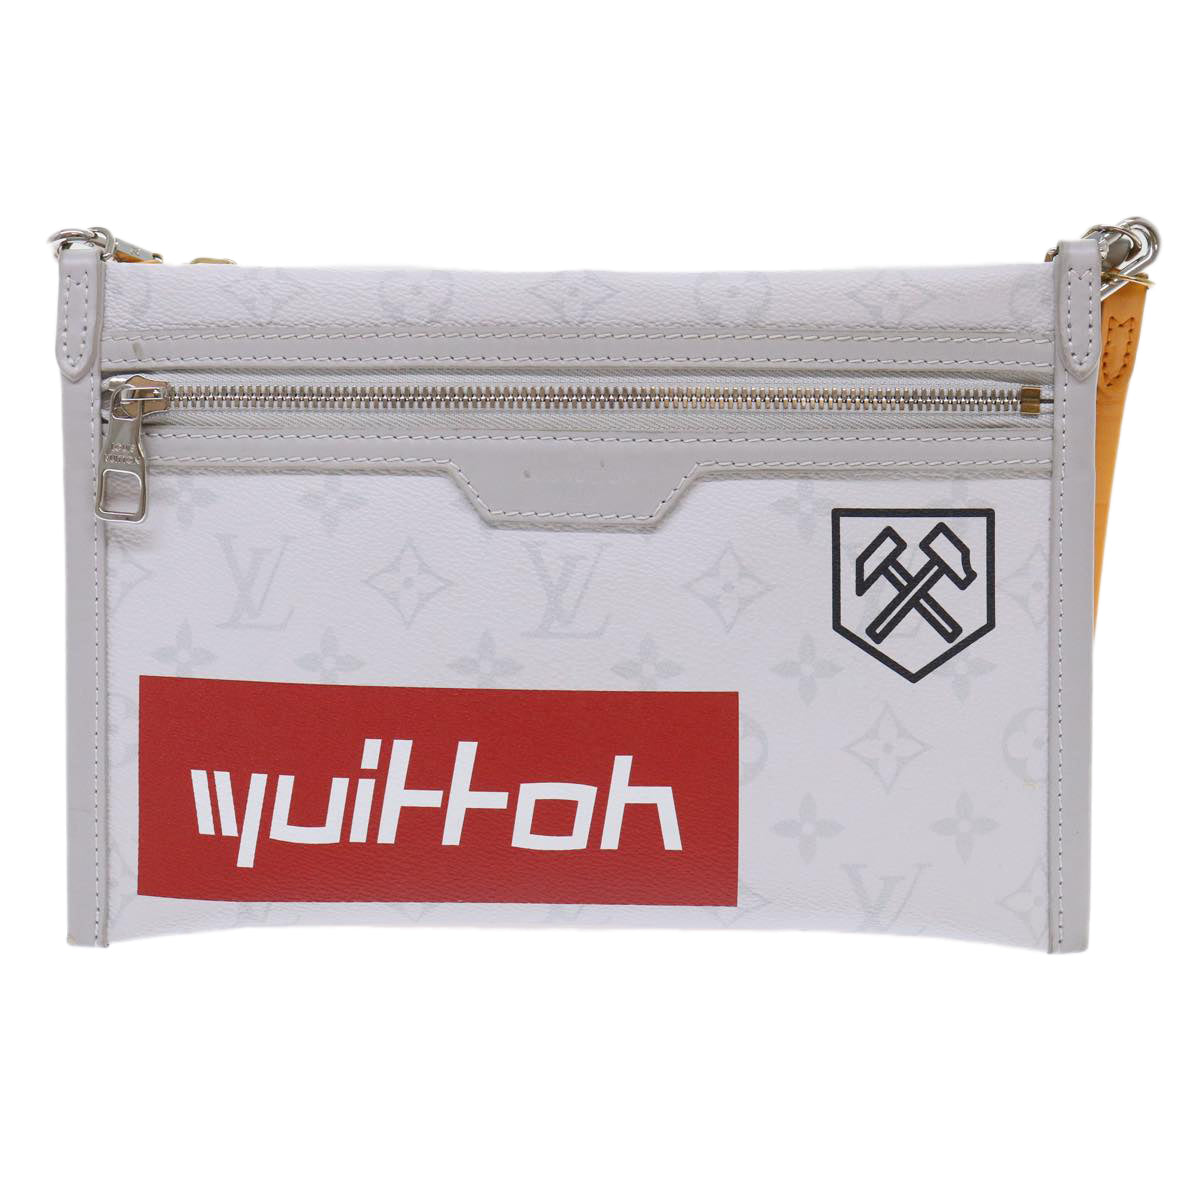 LOUIS VUITTON Monogram White Flat Mensenger Shoulder Bag Bron M44640 Auth 48487A